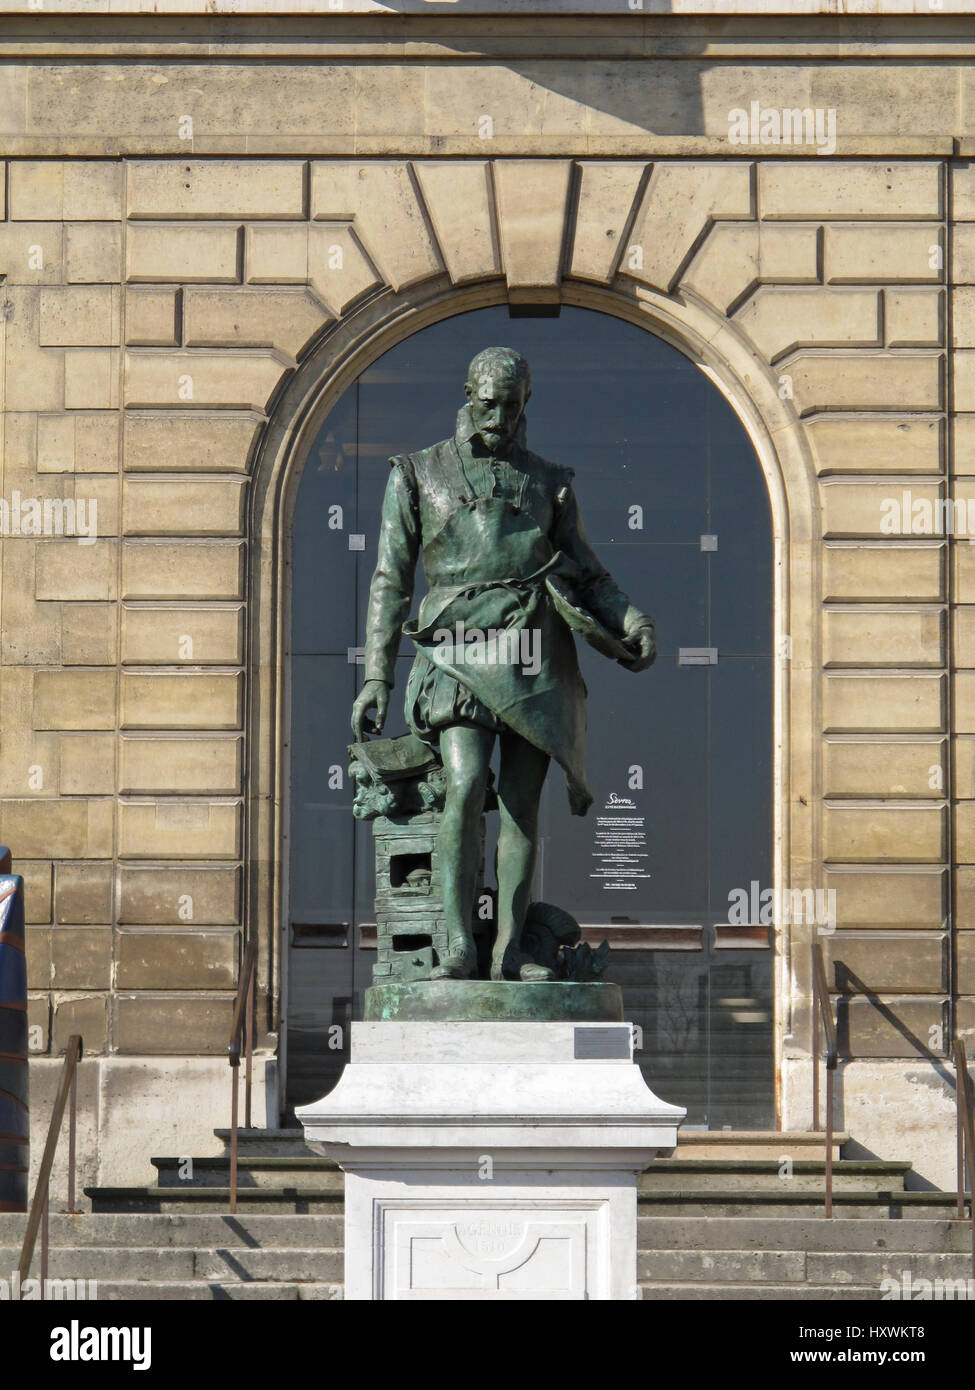 Musee National de Ceramique, National Museum of Ceramics, Bernard Palissy statue, Sevres, Hauts-de-Seine, Paris, France, Europe Stock Photo